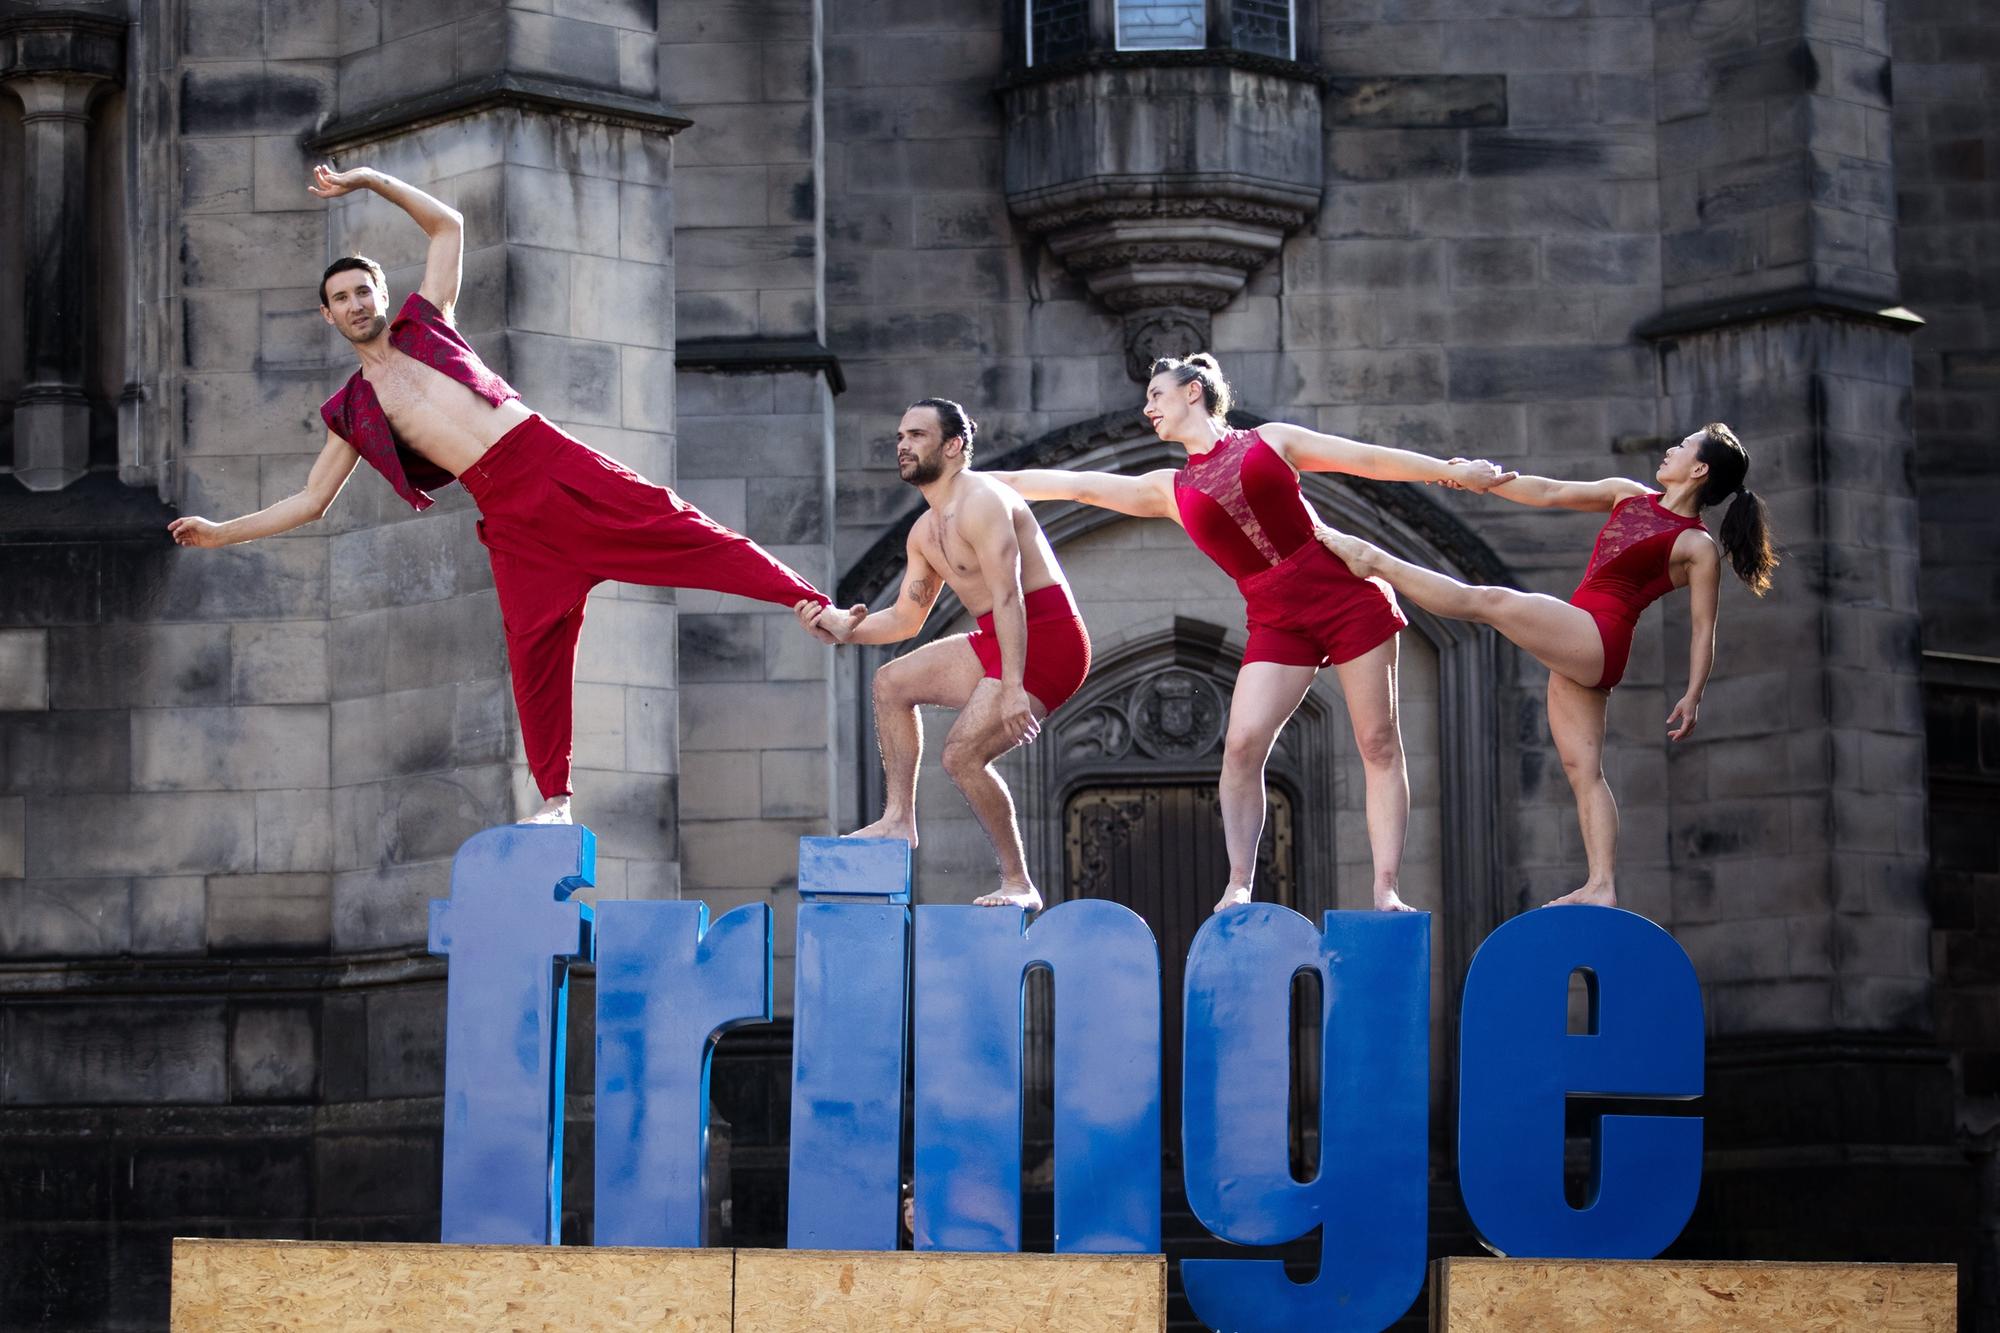 edinburgh festival fringe: organisers hit out after creative scotland funding bid is rejected